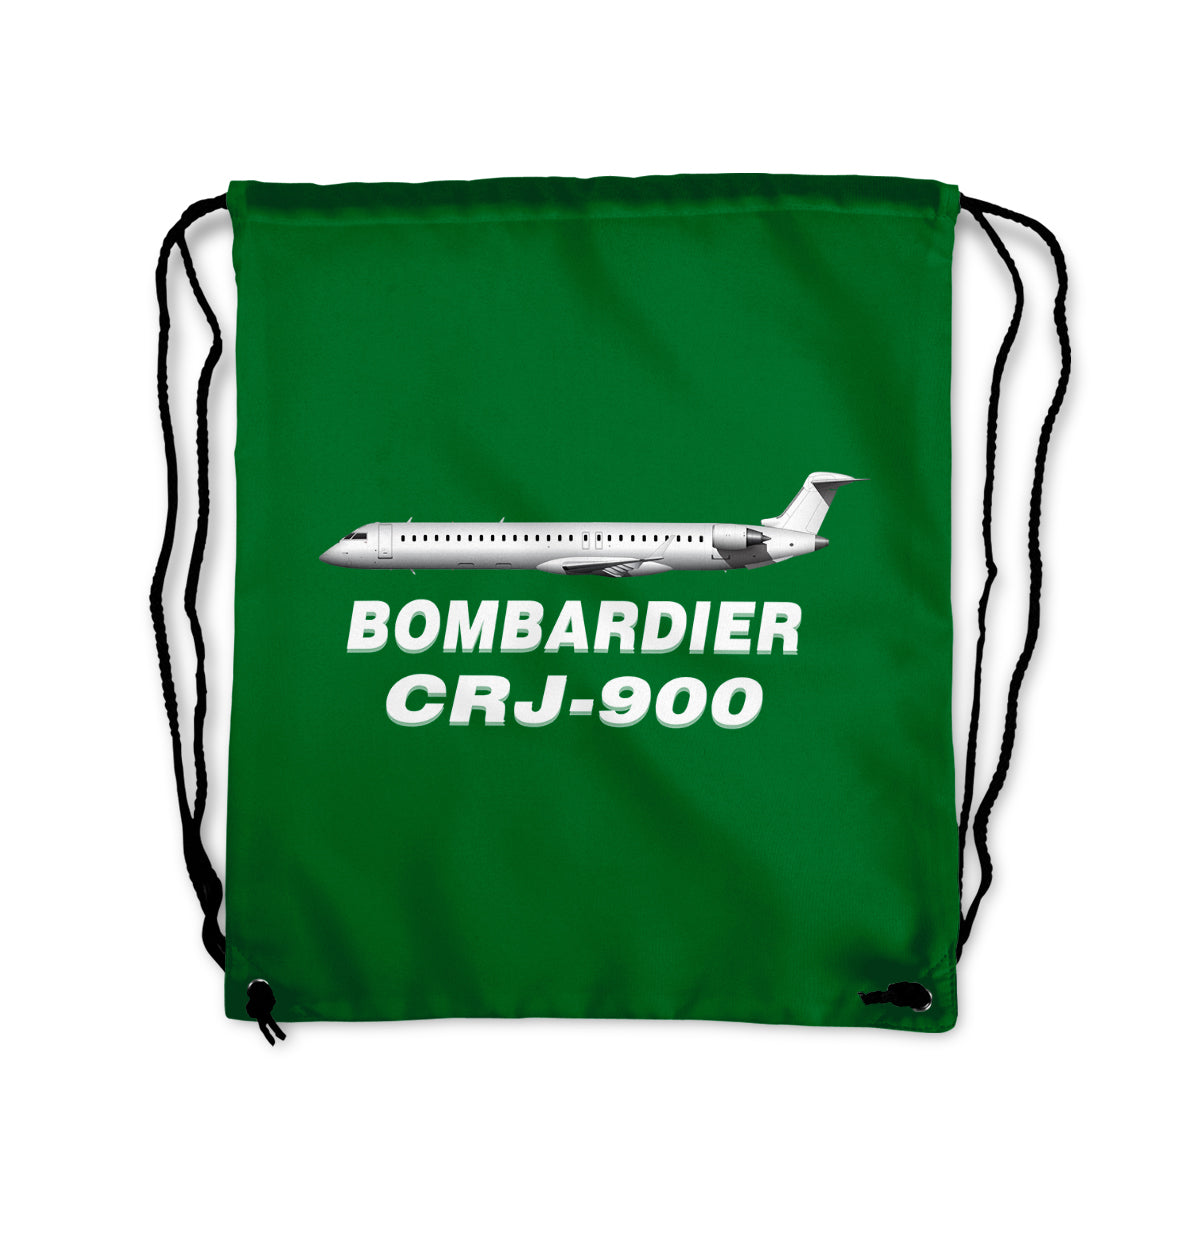 Bombardier CRJ-900 Designed Drawstring Bags